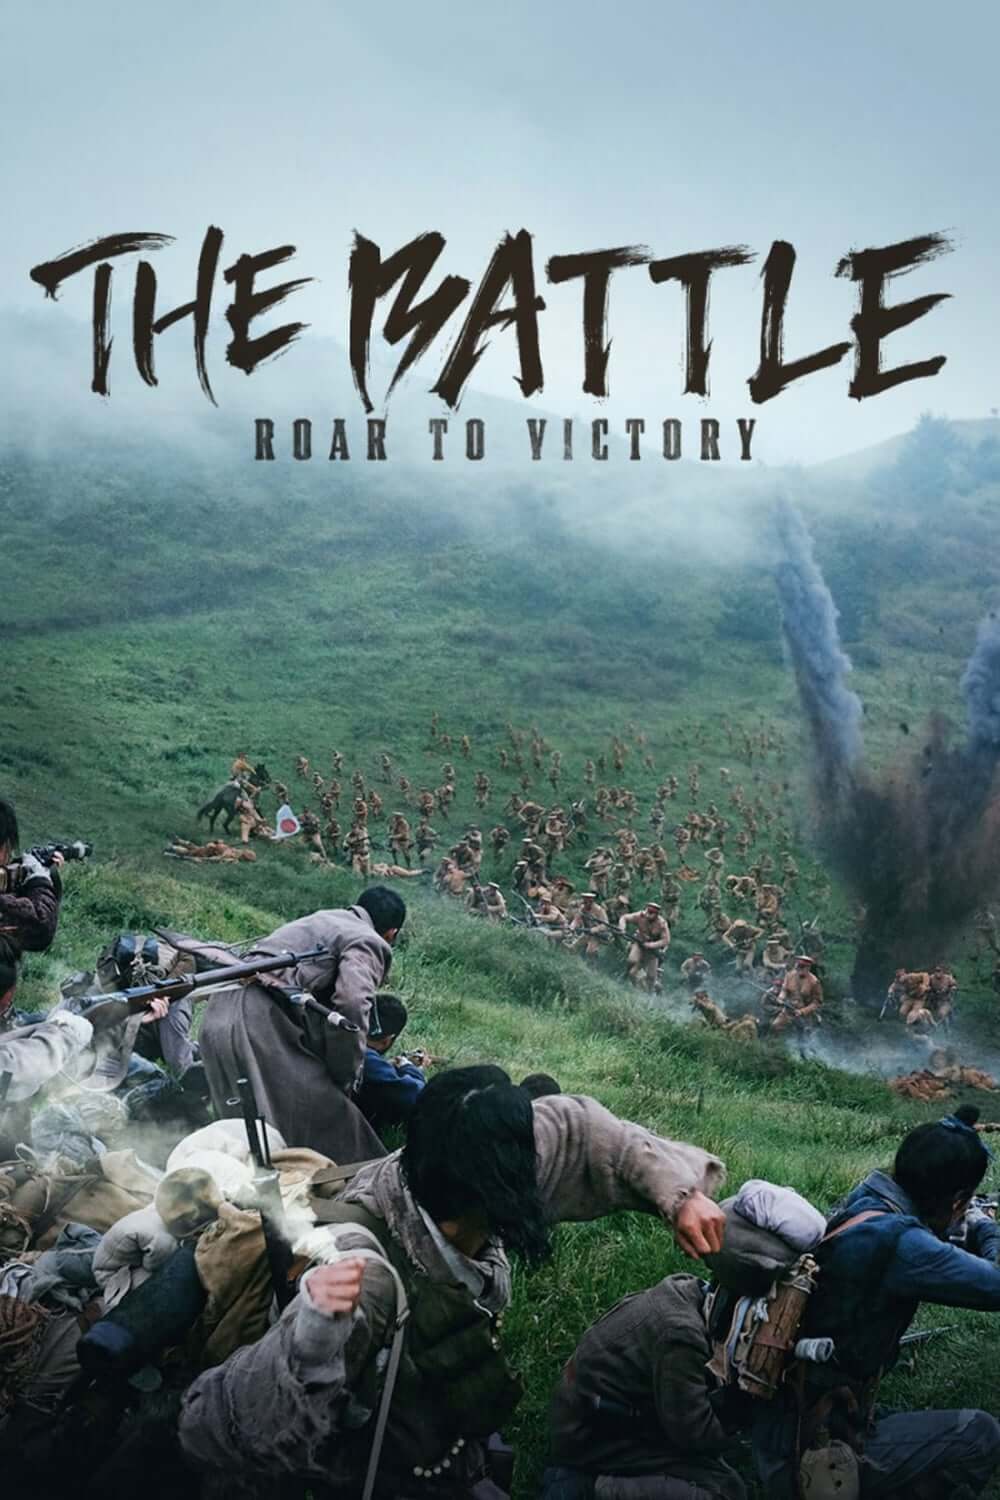 نبرد: غرش برای پیروزی (The Battle: Roar to Victory)